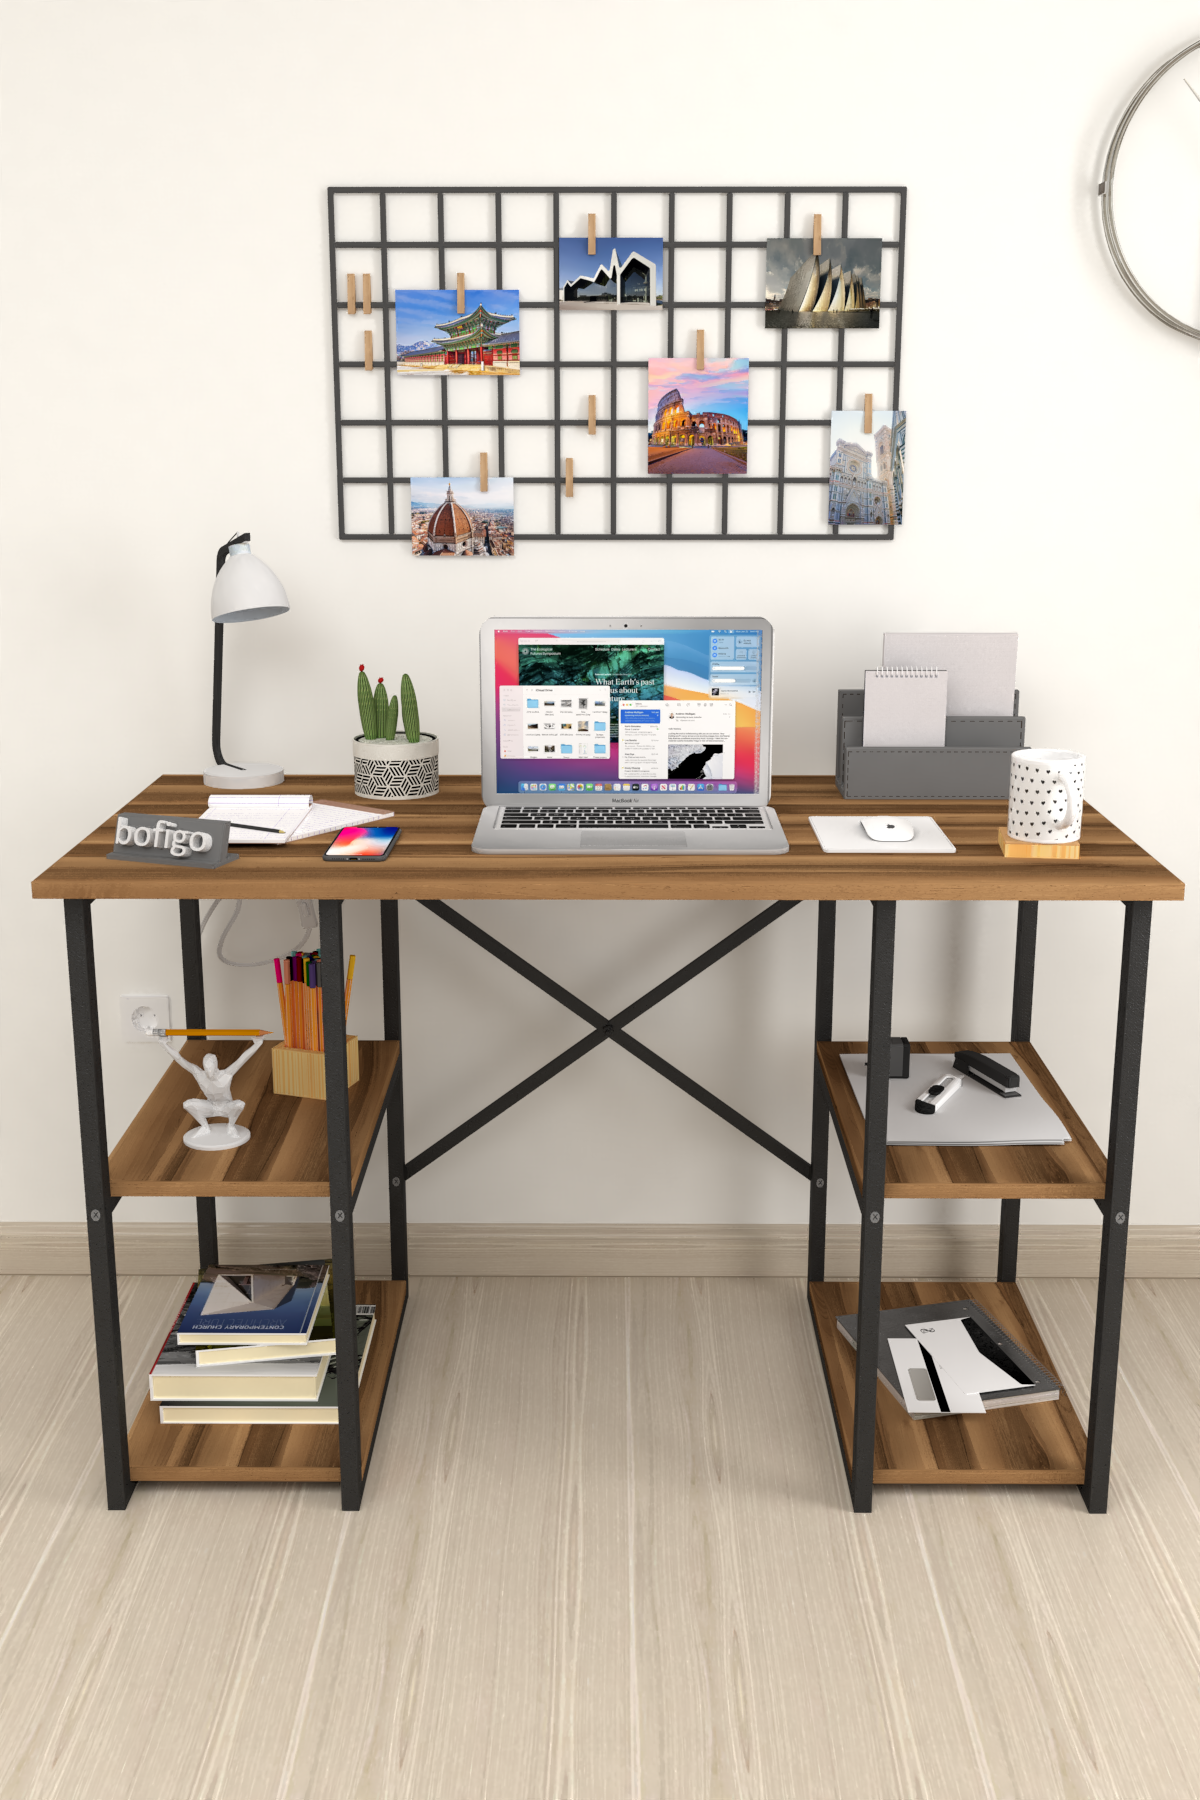 Bofigo 4 Shelf Study Desk 60x120 cm Walnut